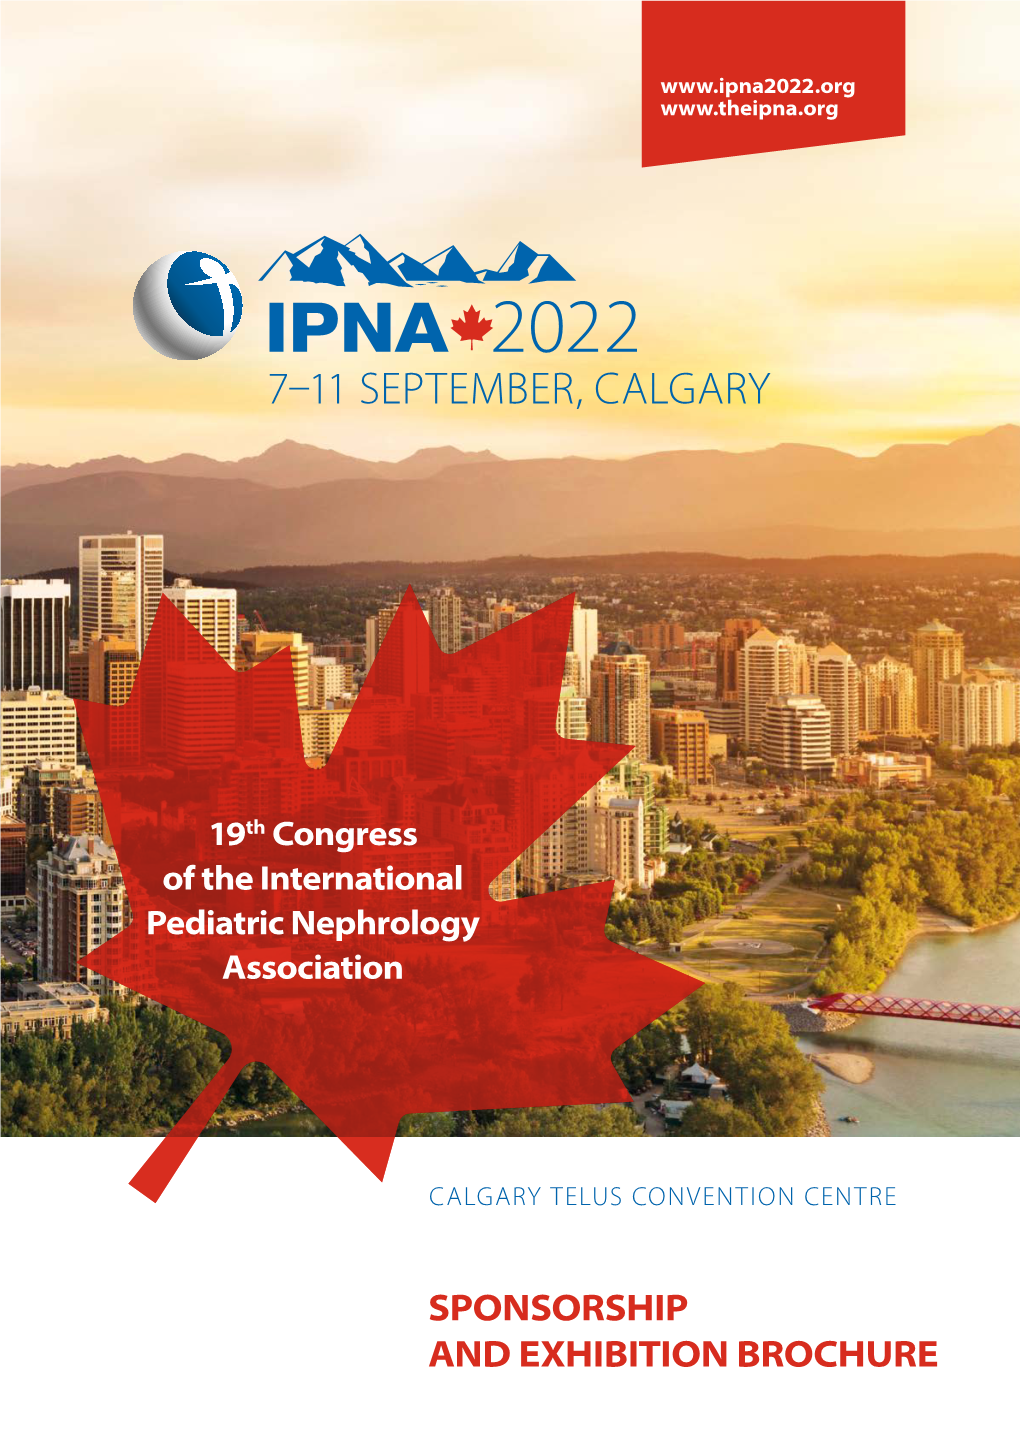 IPNA 2022 Sponsorship Brochure